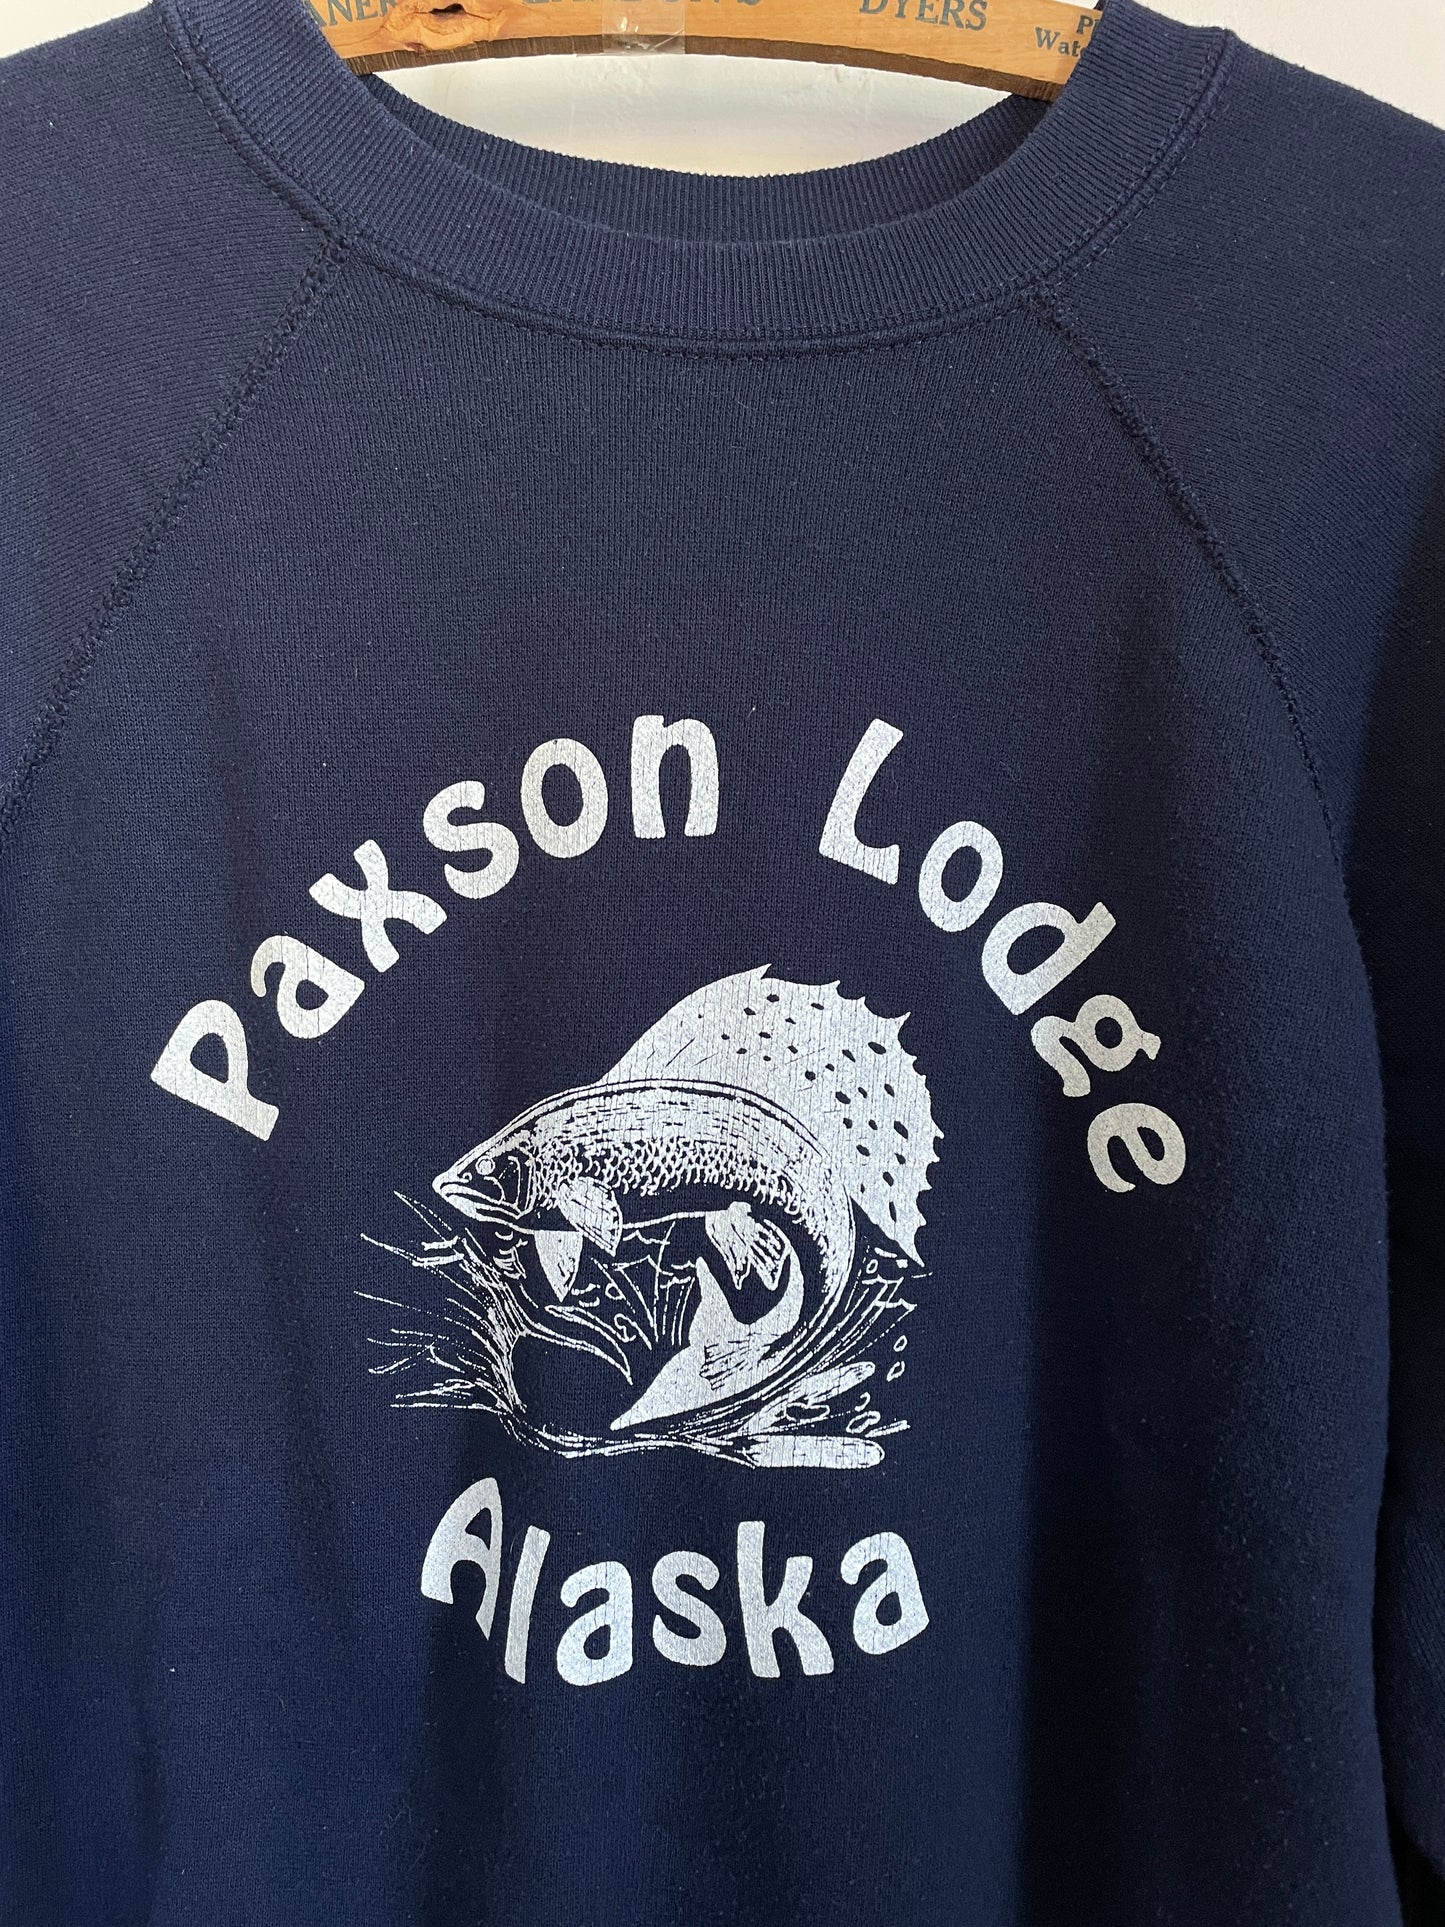 90s Paxson Lodge Alaska Sweatshirt